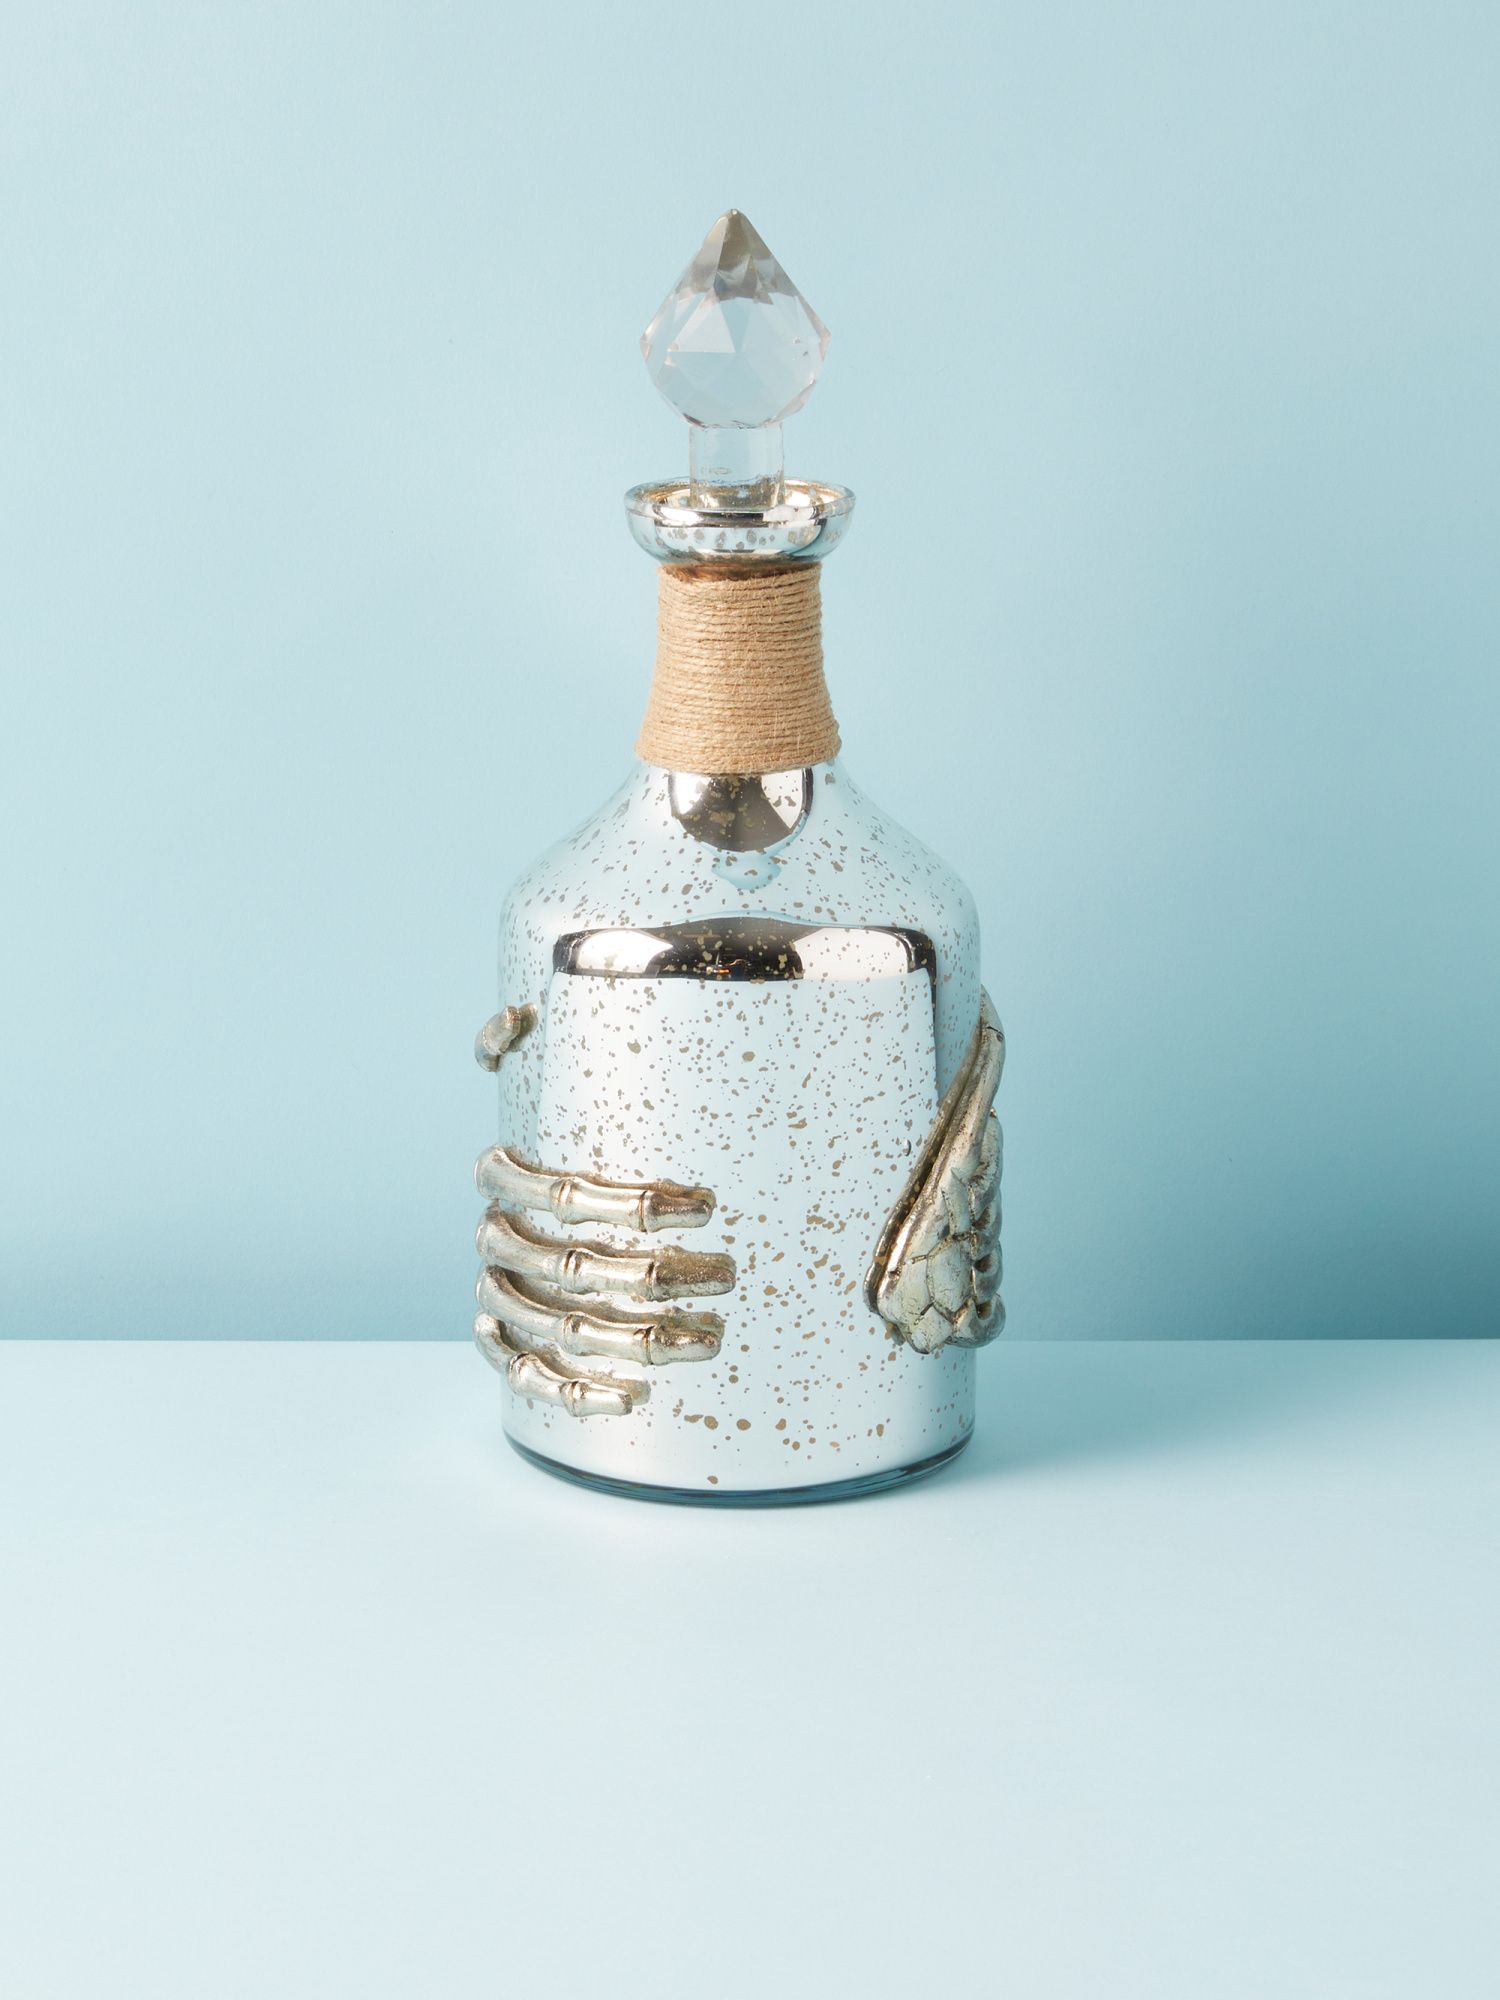 4x12 Mercury Glass Bottle Decor | HomeGoods